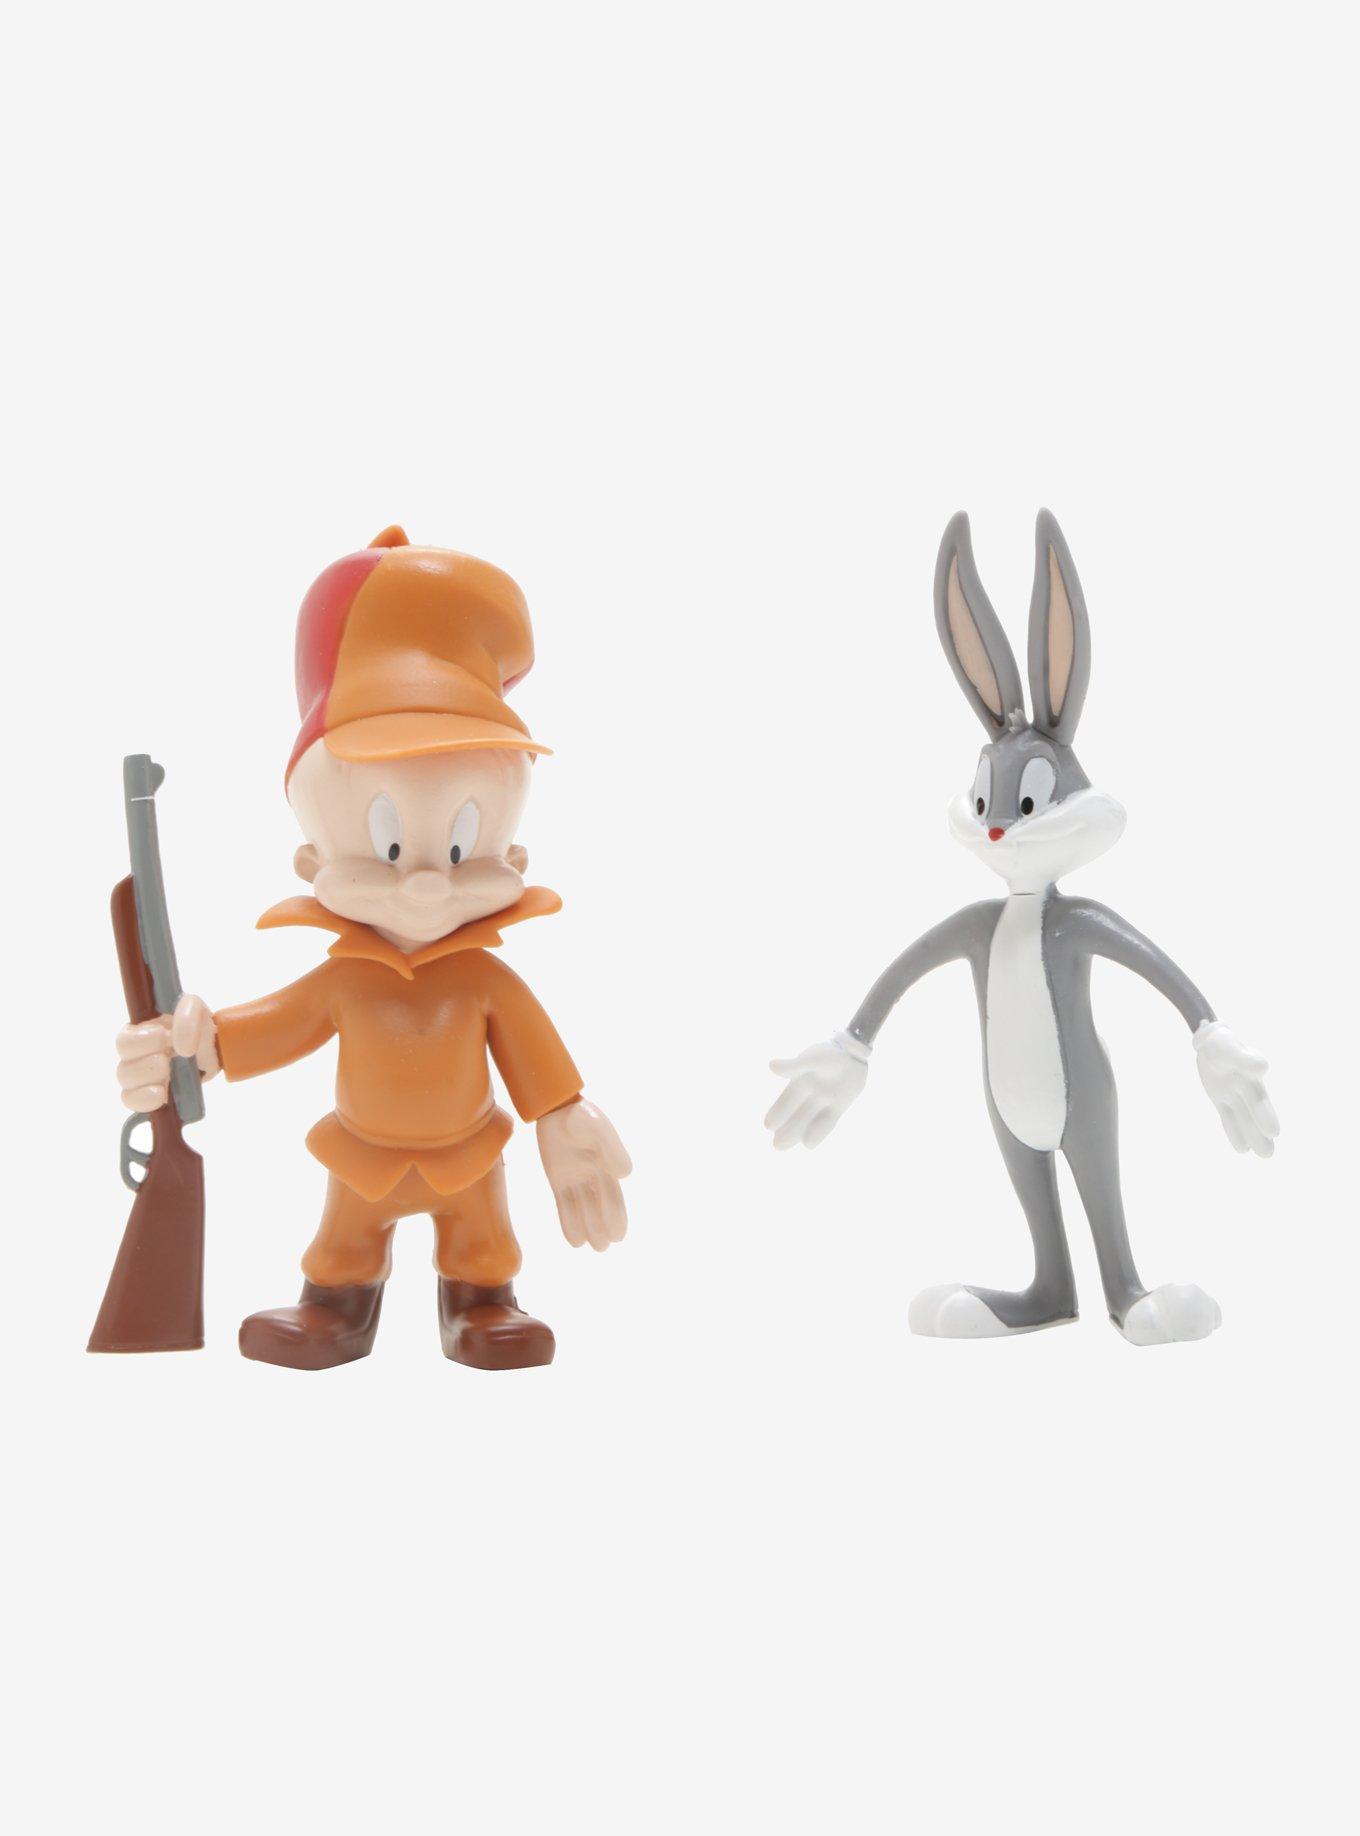 Looney Tunes Bugs Bunny & Elmer Fudd Bendable Figure Set | Hot Topic